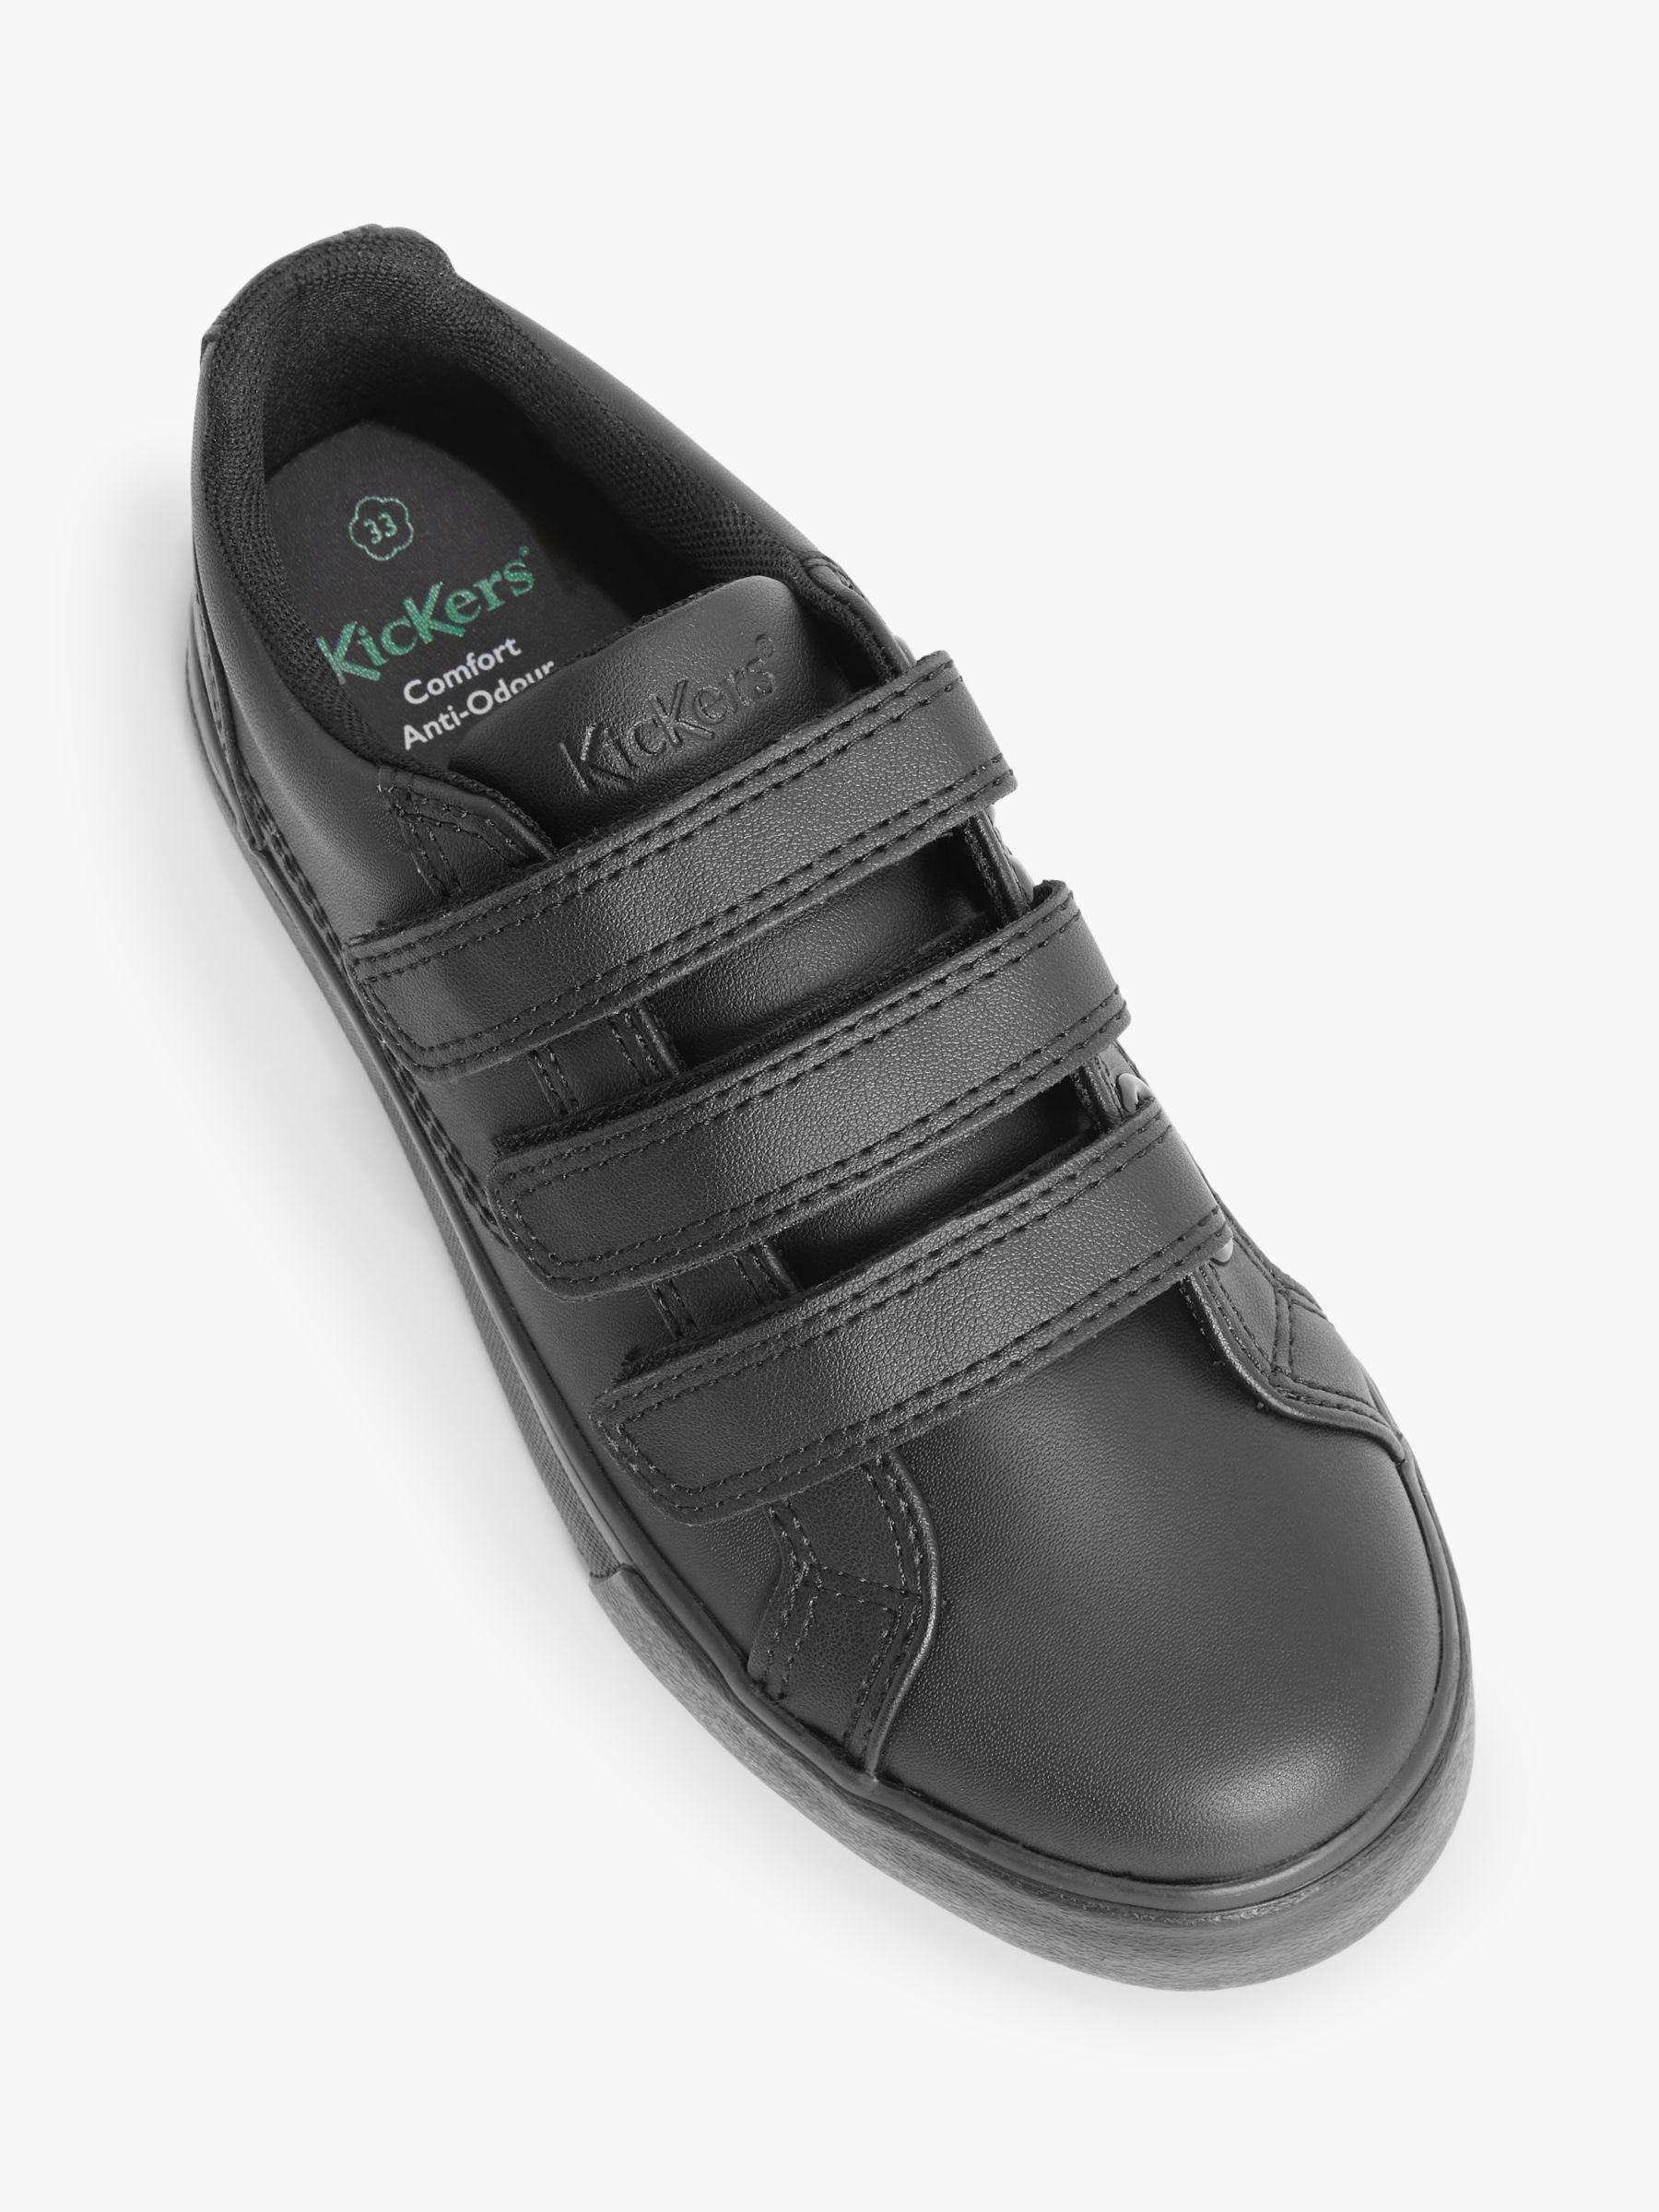 Kickers Children's Tovni Trip School Shoes, Black Leather at John Lewis